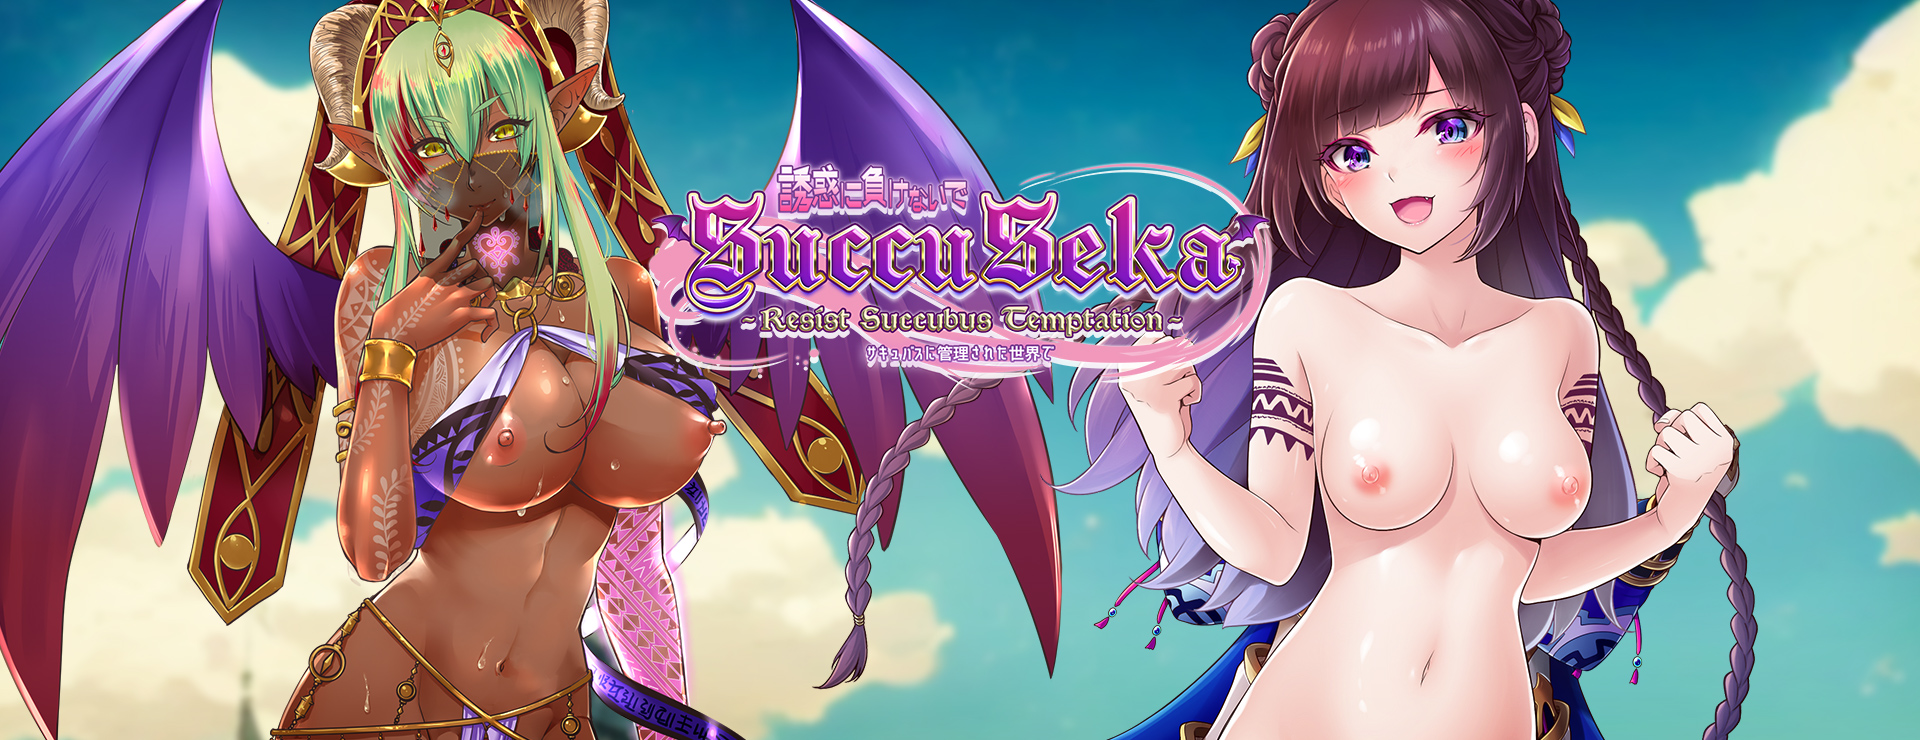 SuccuSeka: Resist Succubus Temptation Global Version - Visual Novel Game